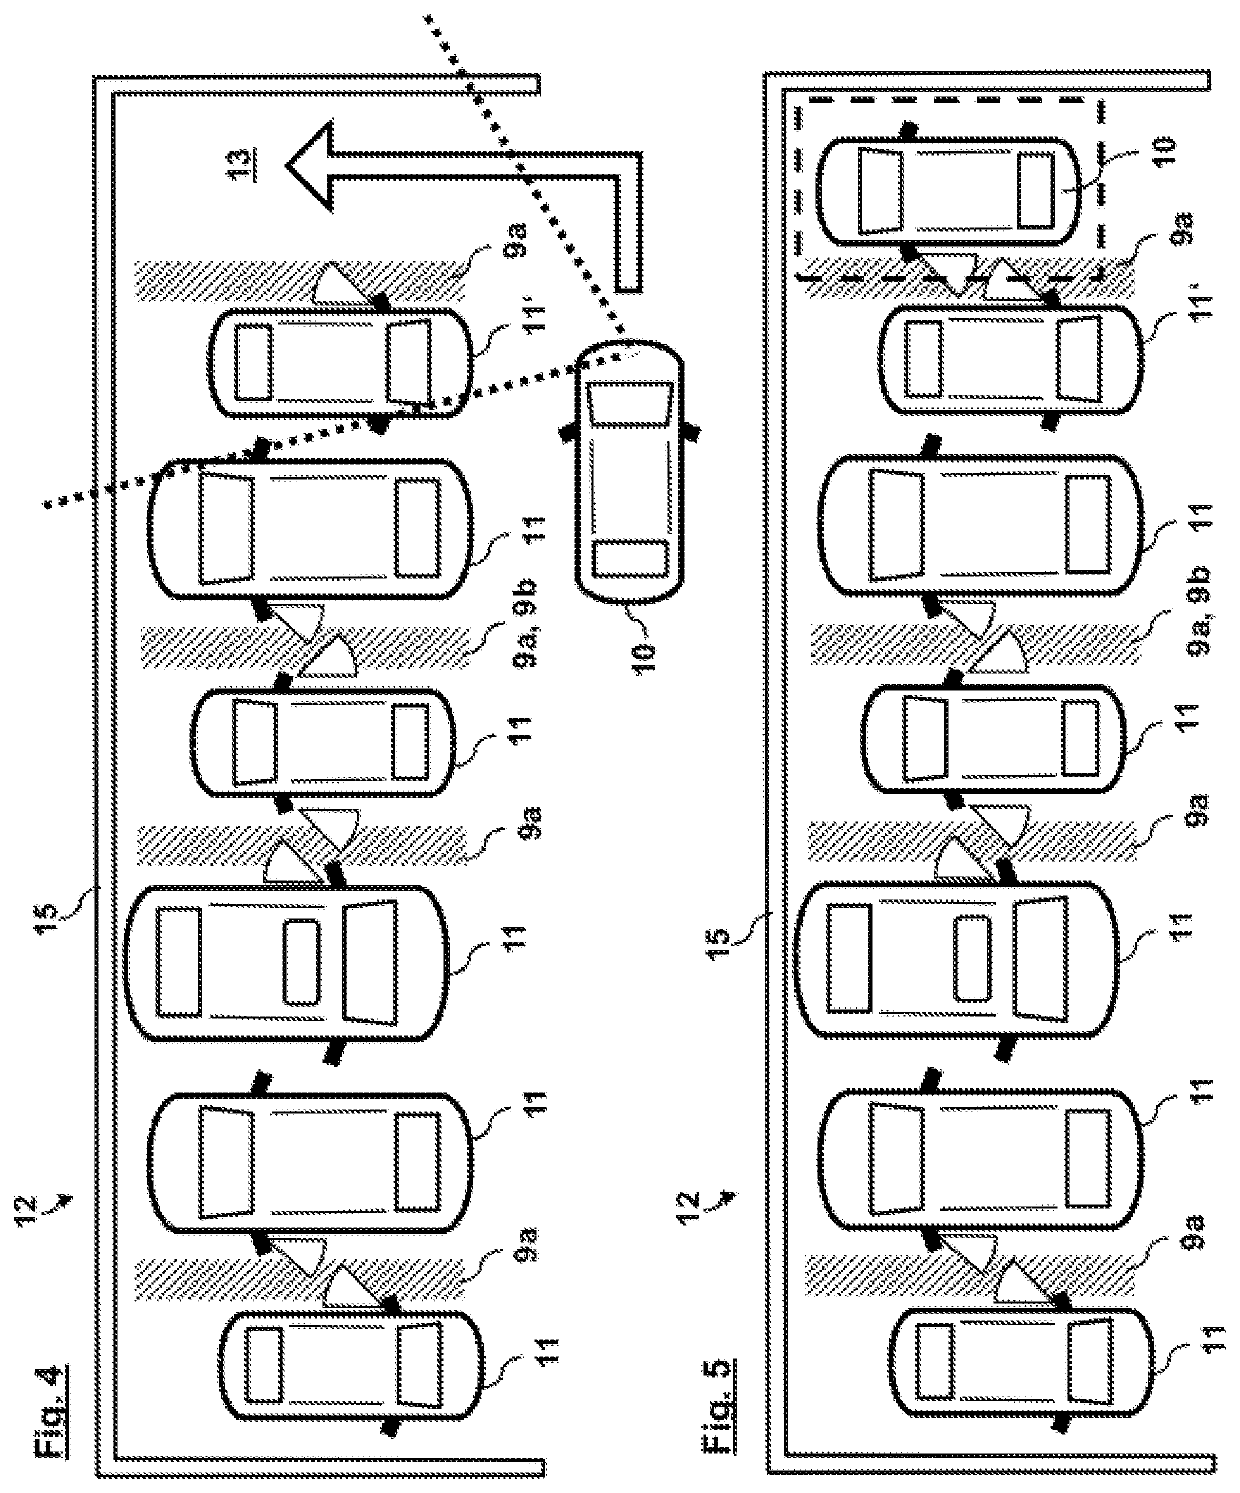 Method for assisting bay parking maneuvers of a vehicle and a parking assistant for a vehicle